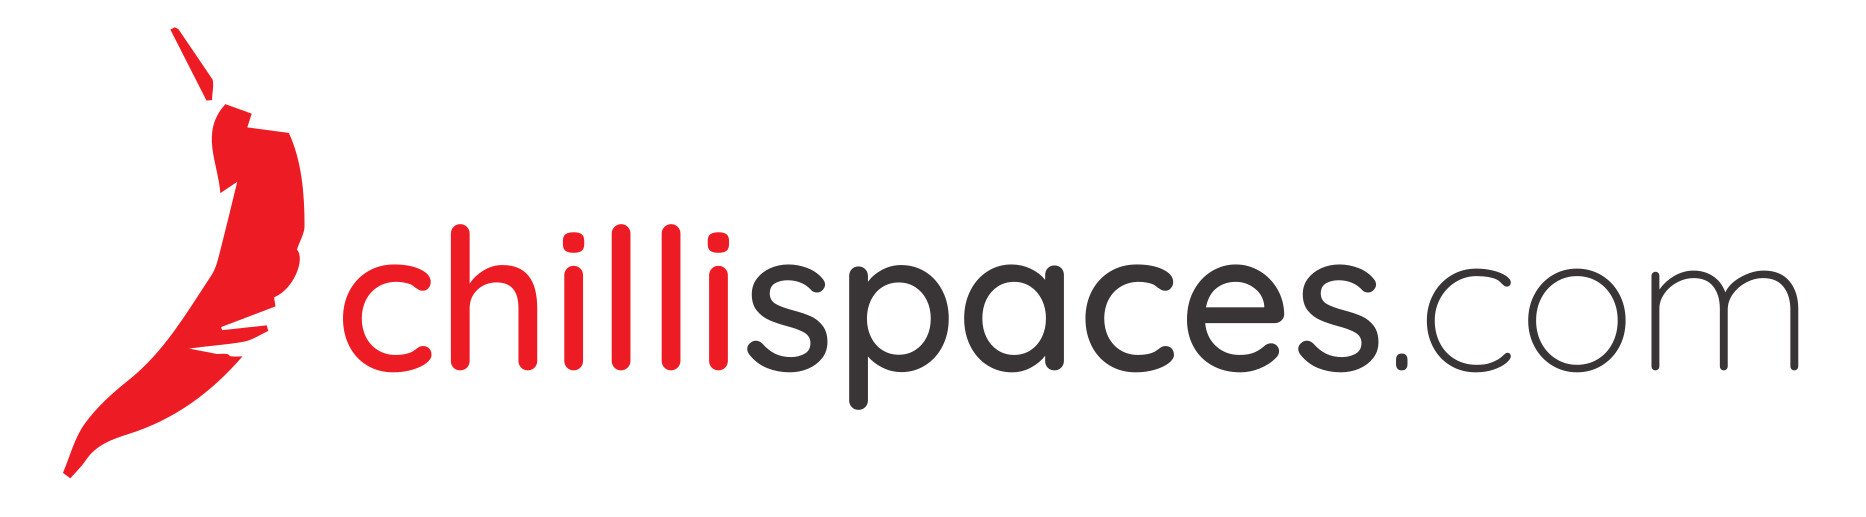 Chili Spaces logo